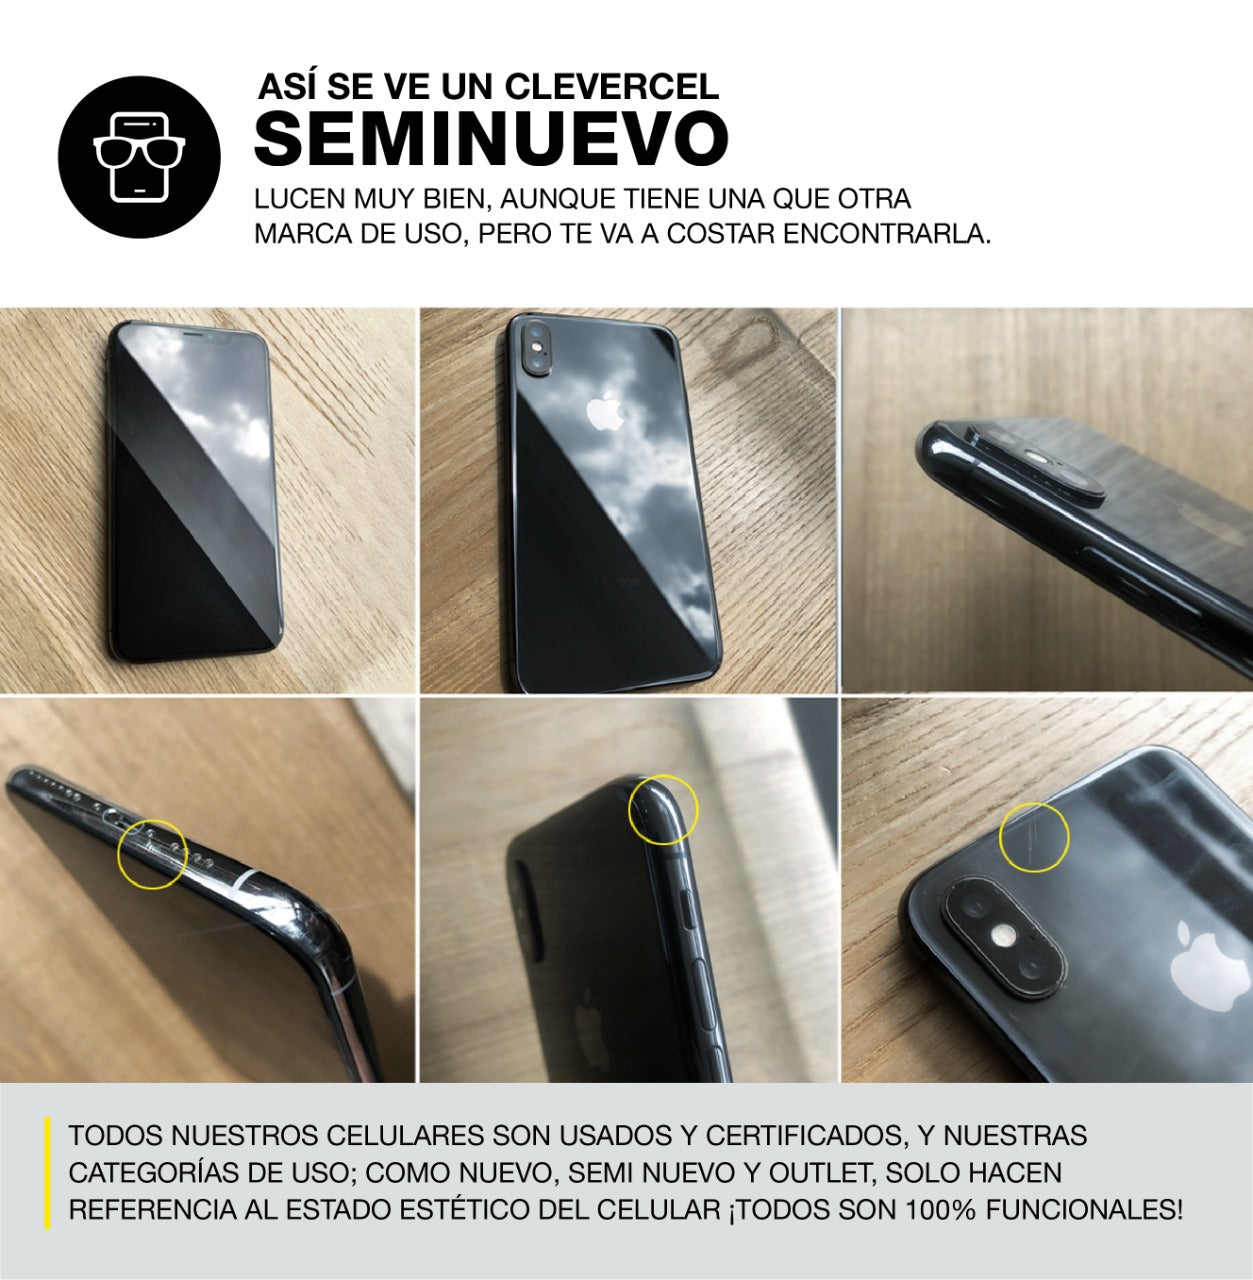 Samsung Galaxy M32 (2021)